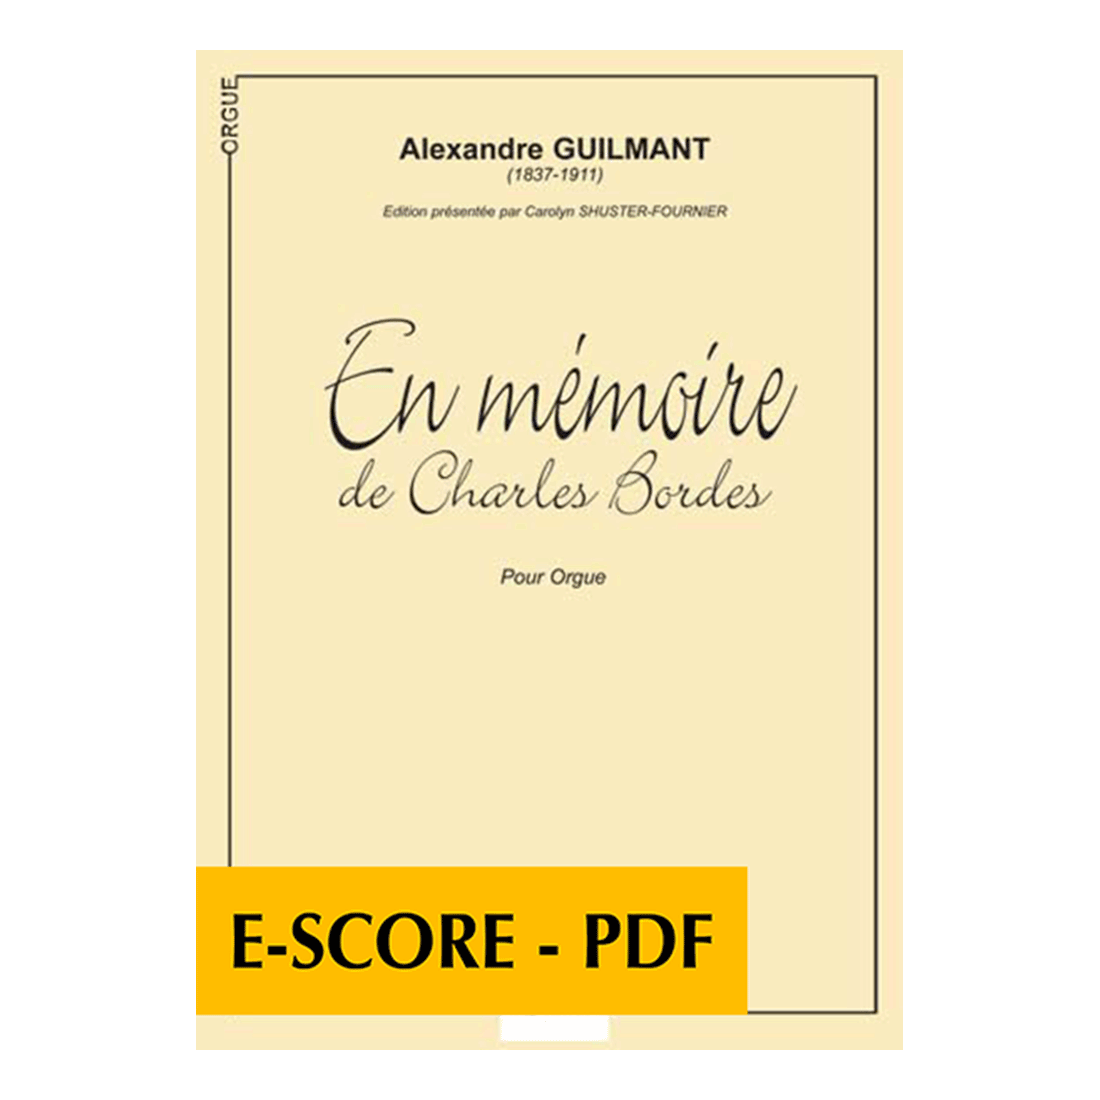 En mémoire de Charles Bordes for organ - E-score PDF